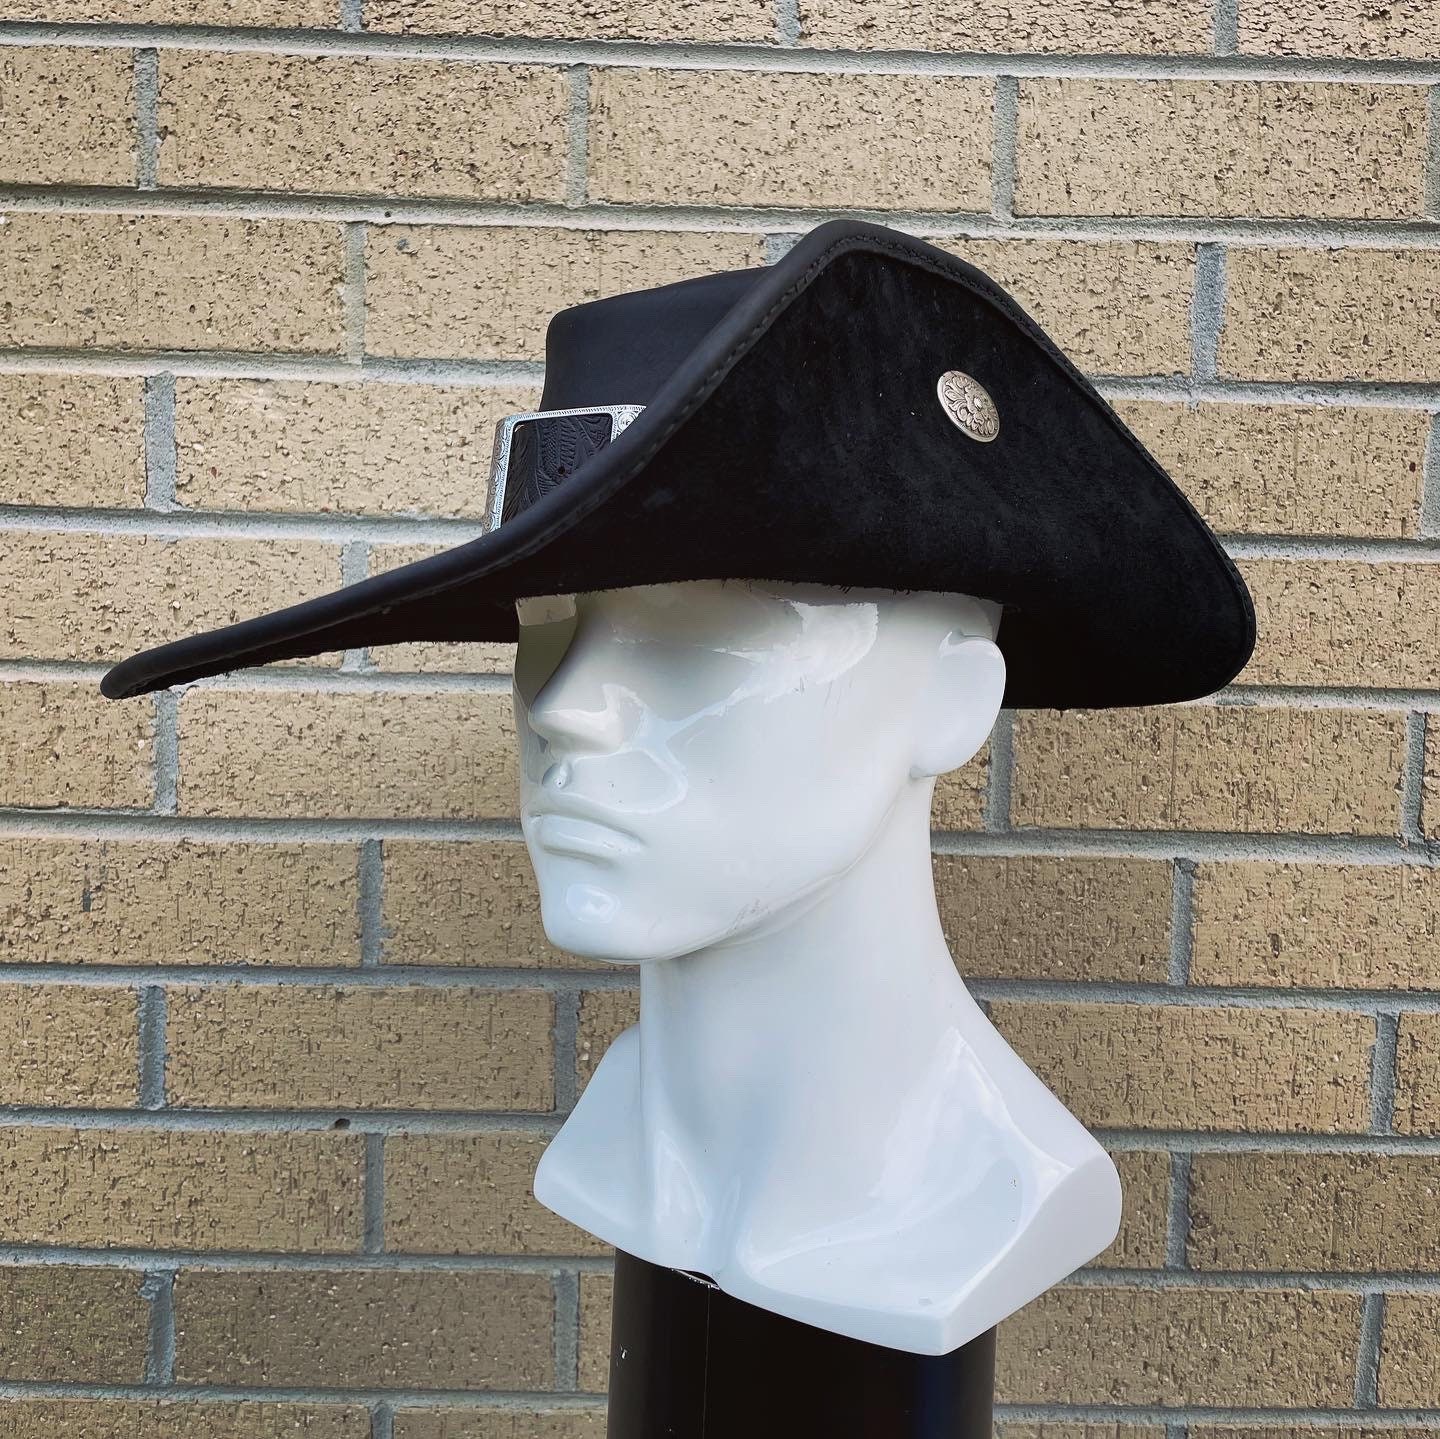 Musketeer leather hat by akinra-workshop on DeviantArt